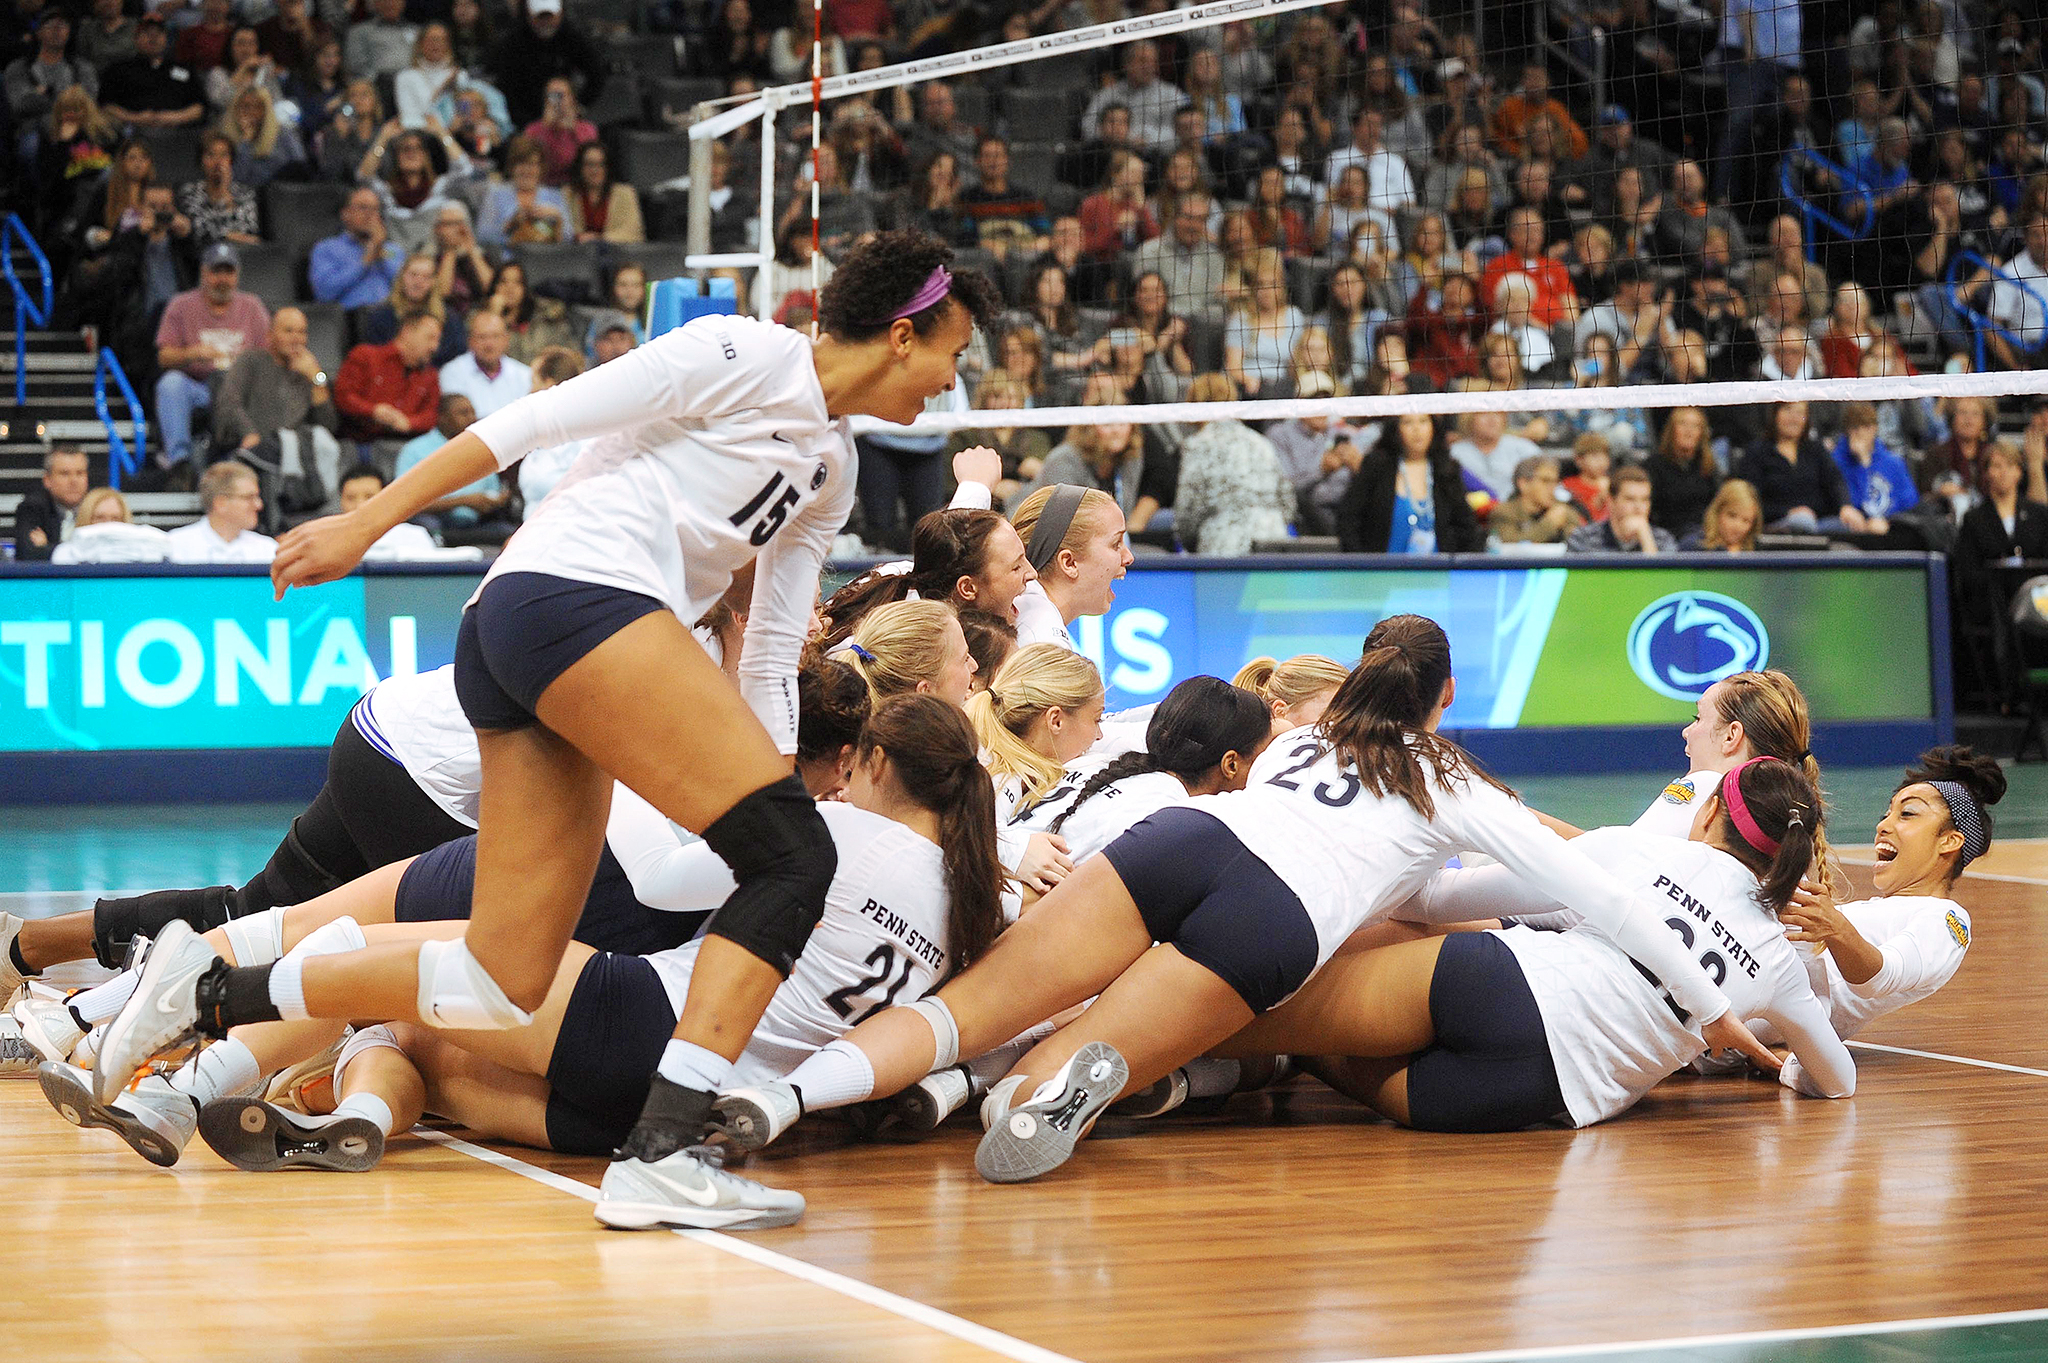 NCAA Volleyball Final: Penn State Celebrates - 2014 NCAA Women's ...